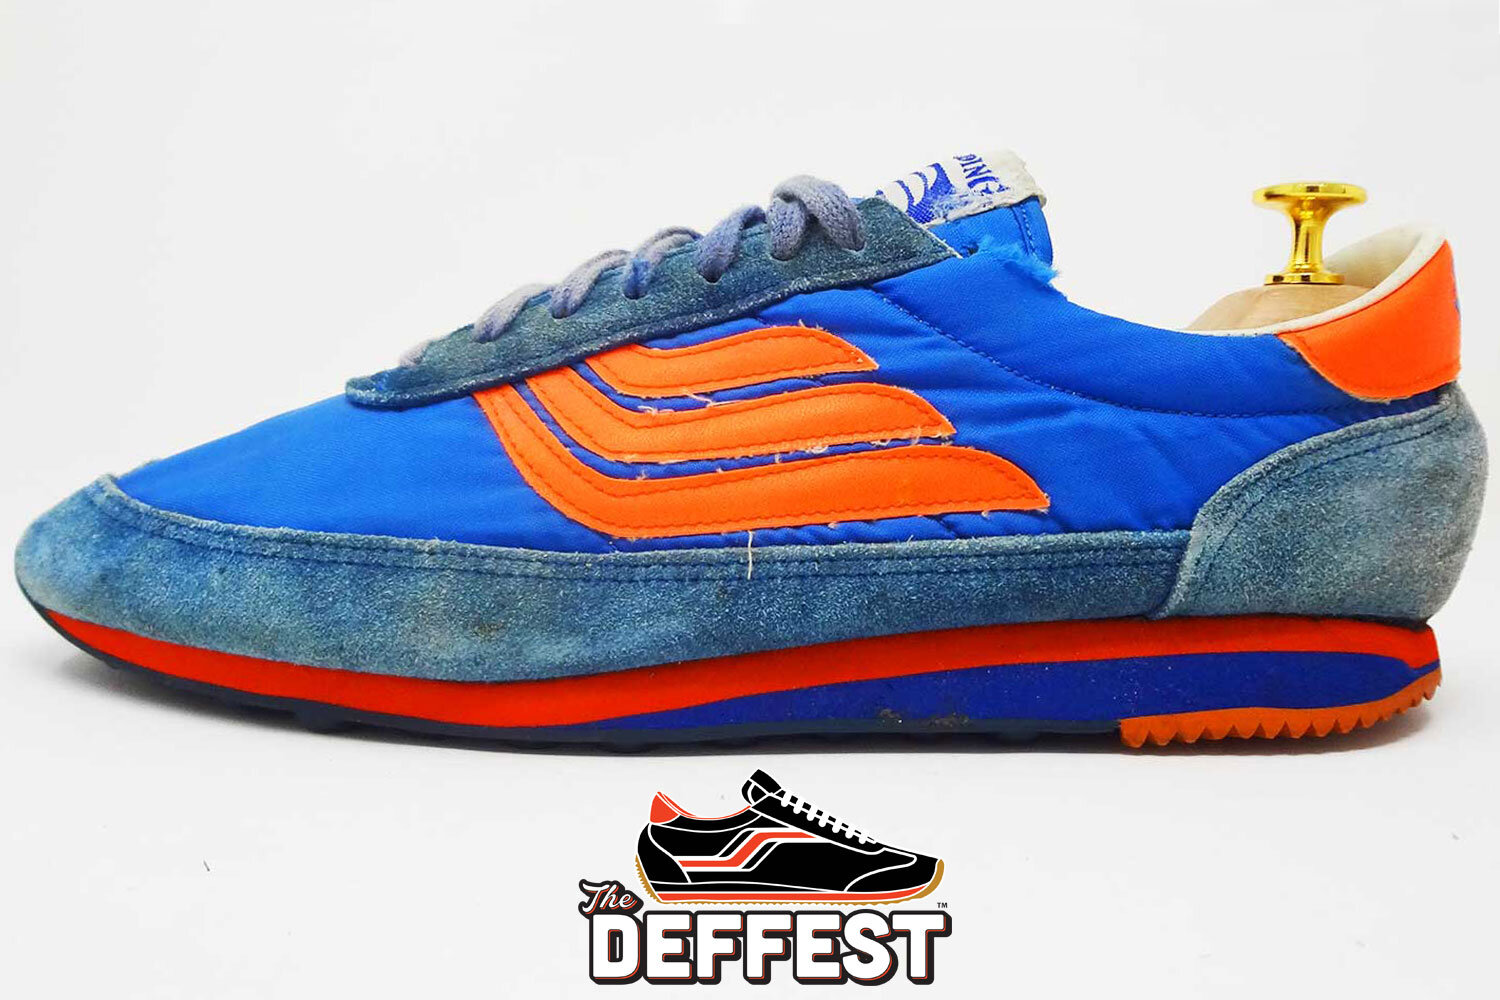 Spalding vintage sneakers @ The Deffest